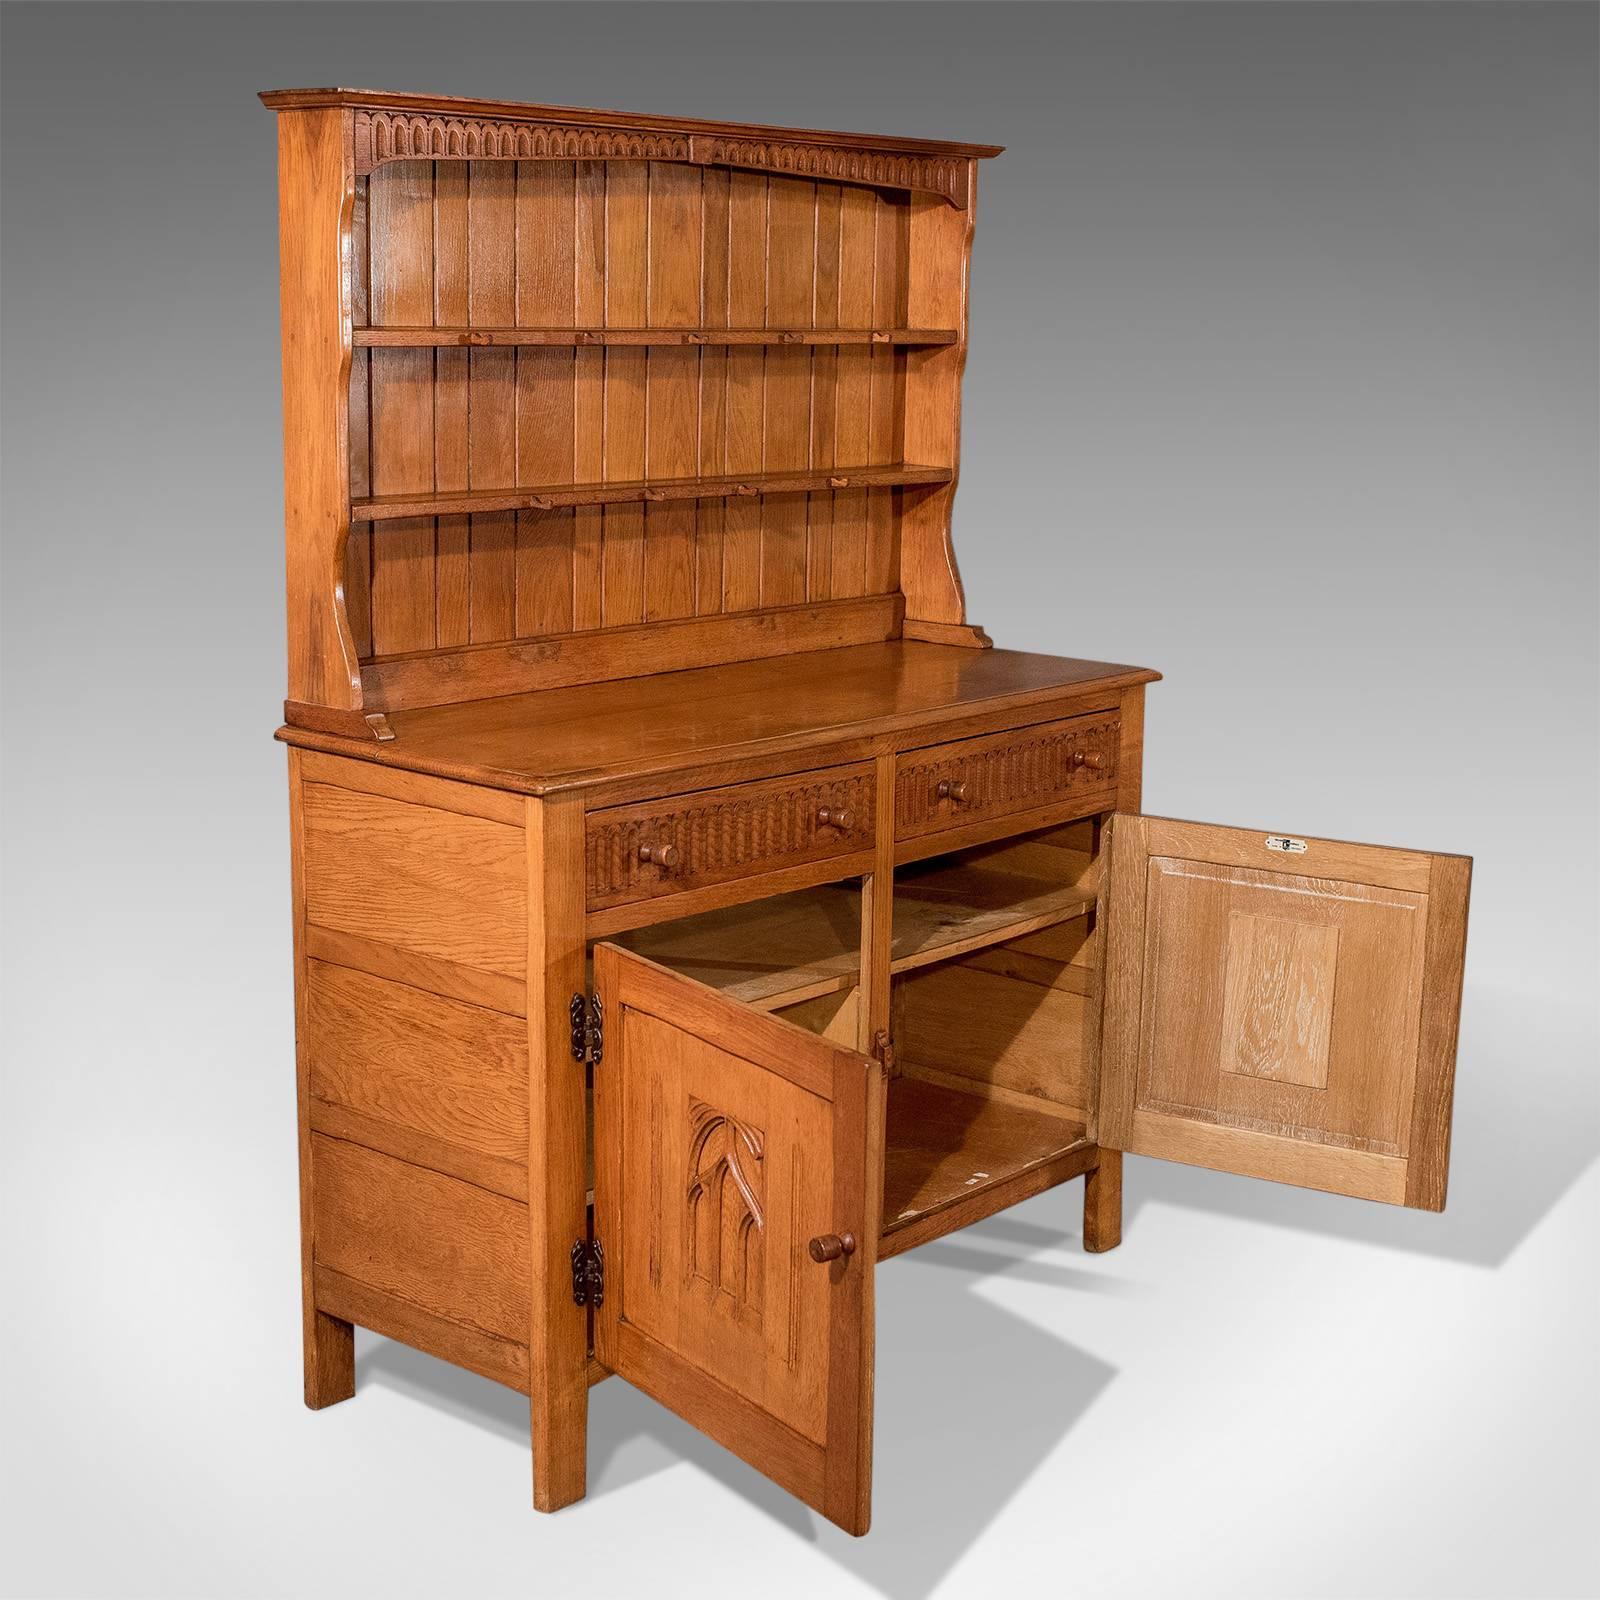 Oak Kitchen Display Dresser Cabinet English Art Deco Period Mid-20th Century 1